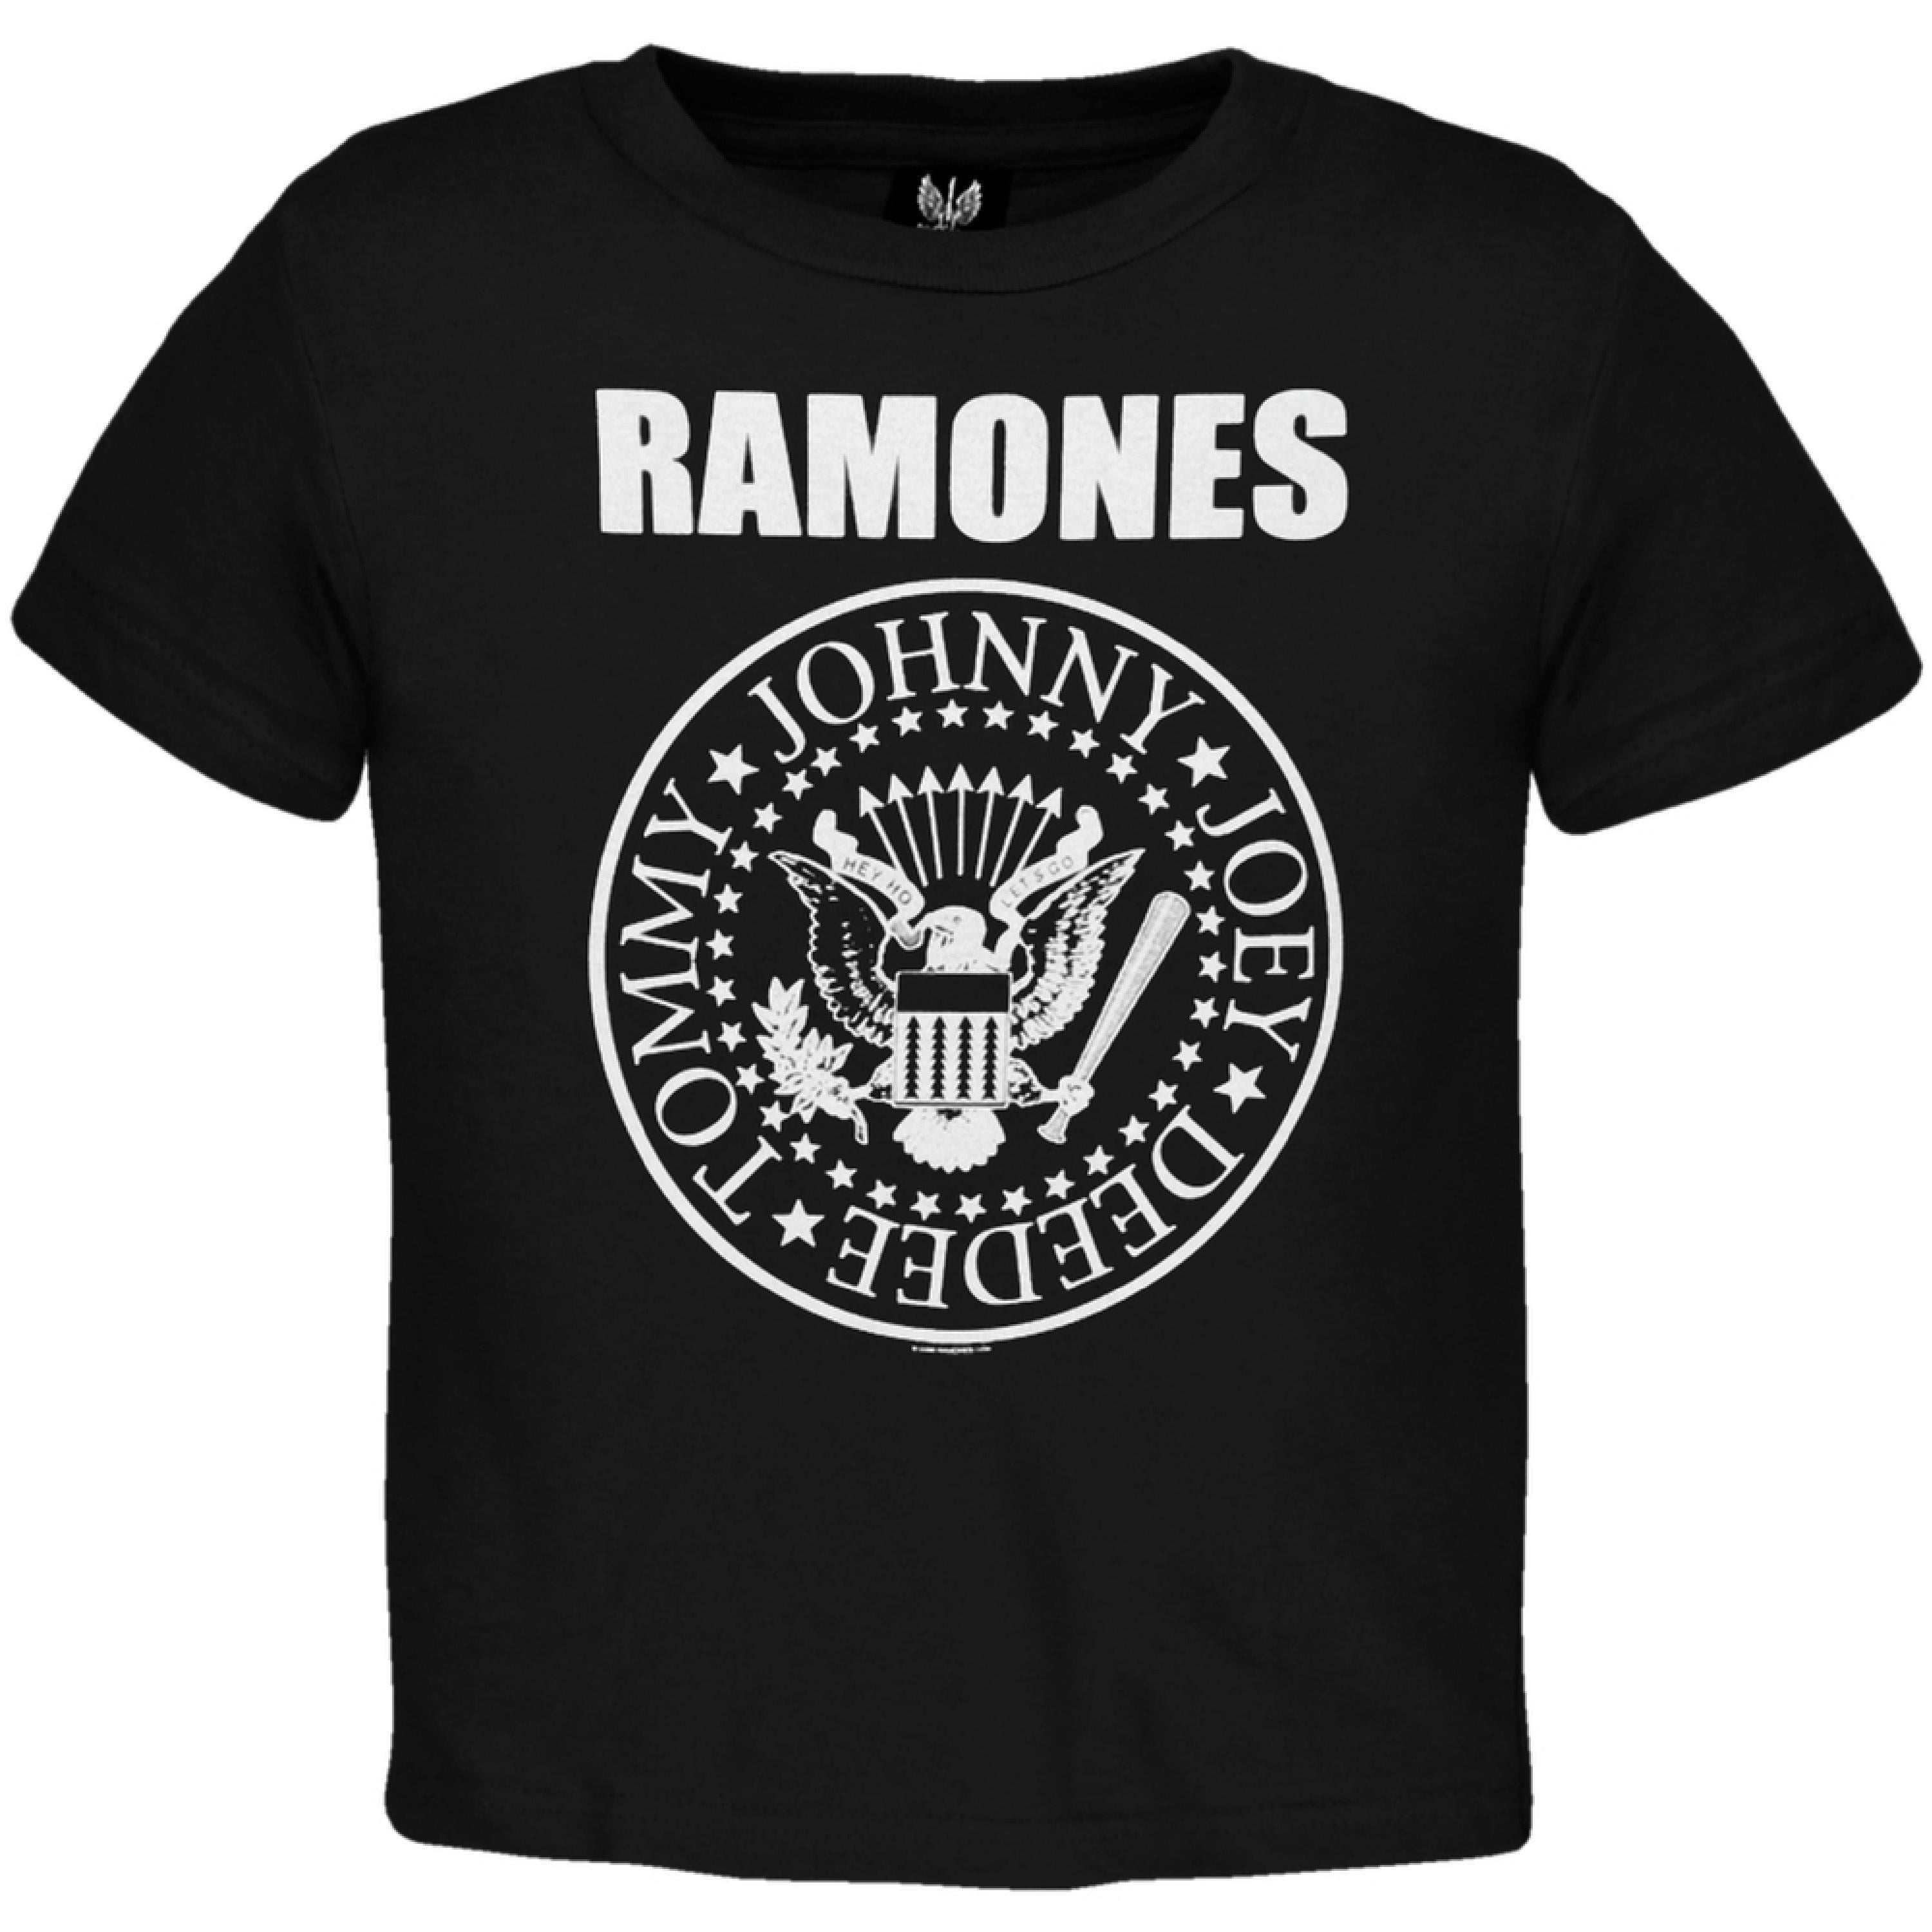 Ramones - Ramones Boys' Seal Toddler Tee Childrens T-shirt Black